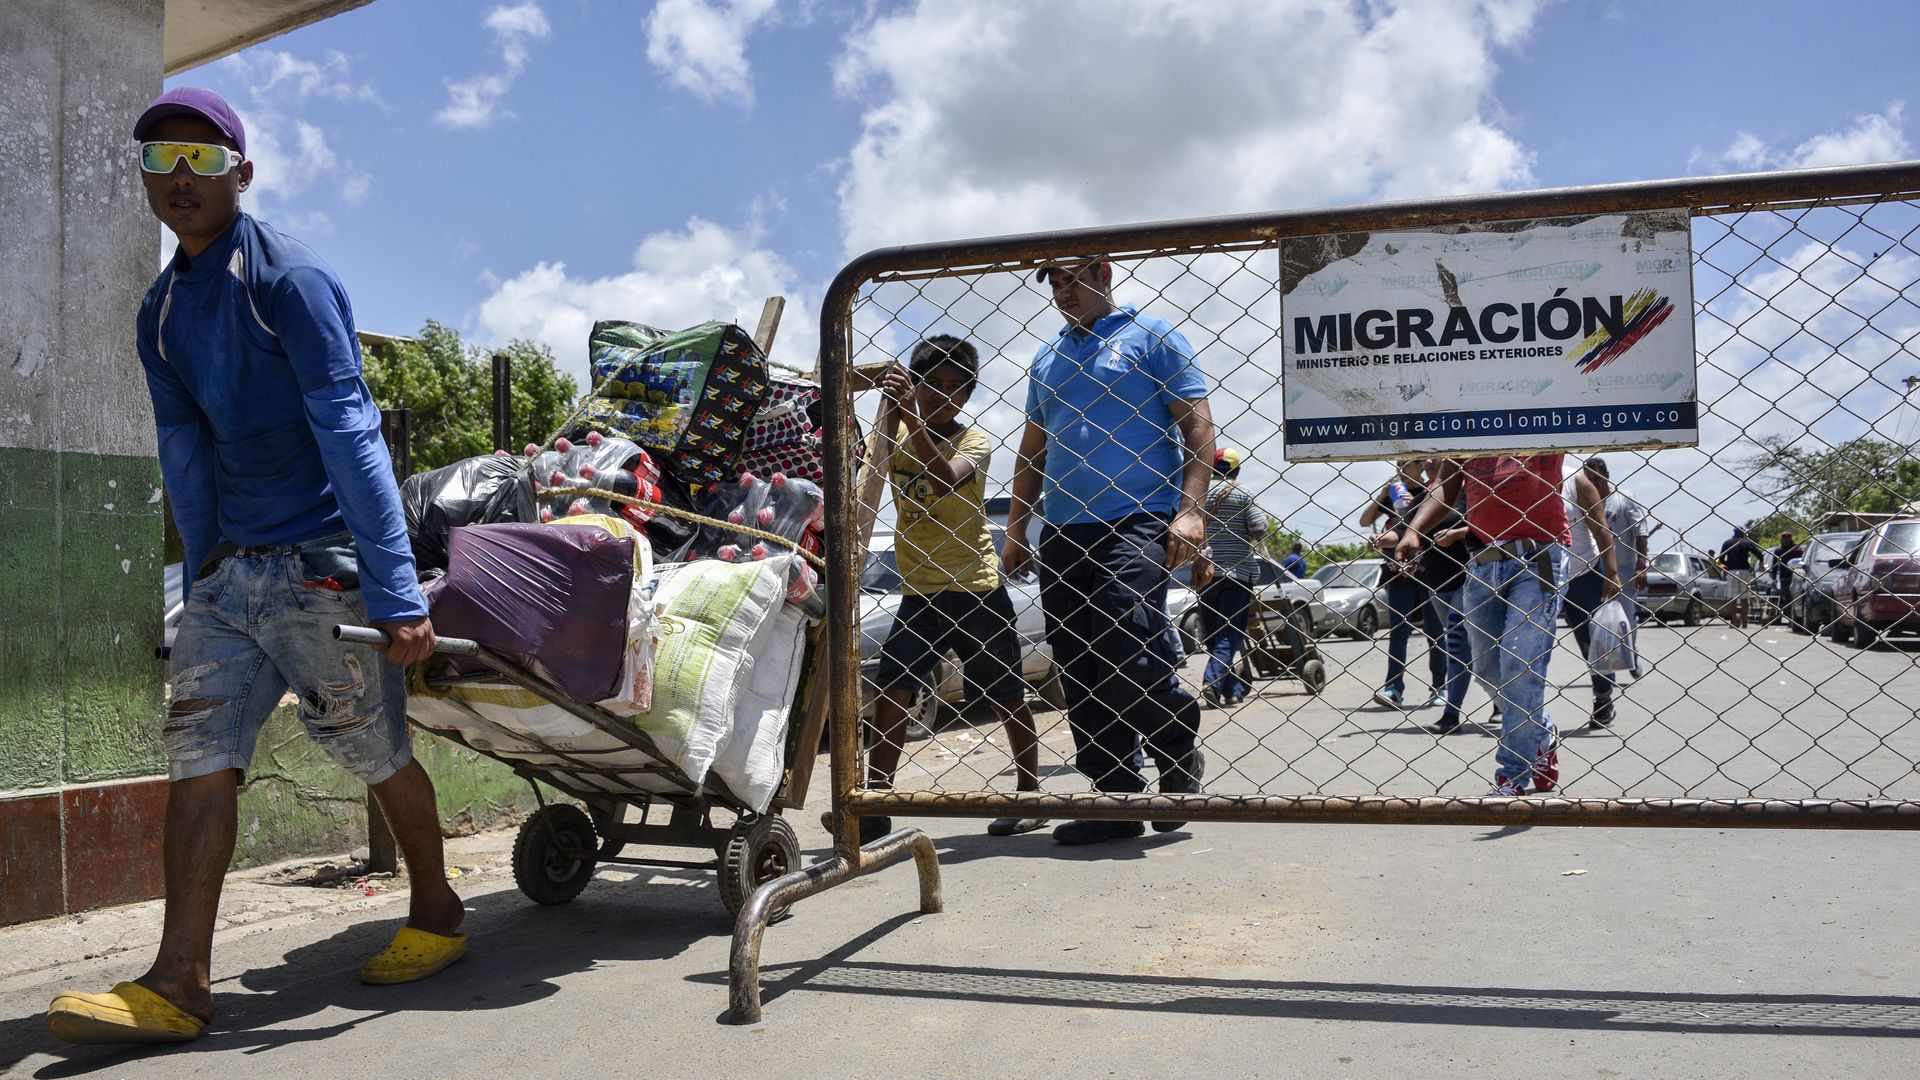 Photo of Venezuelan migrants walking into an enclosed area with belongings